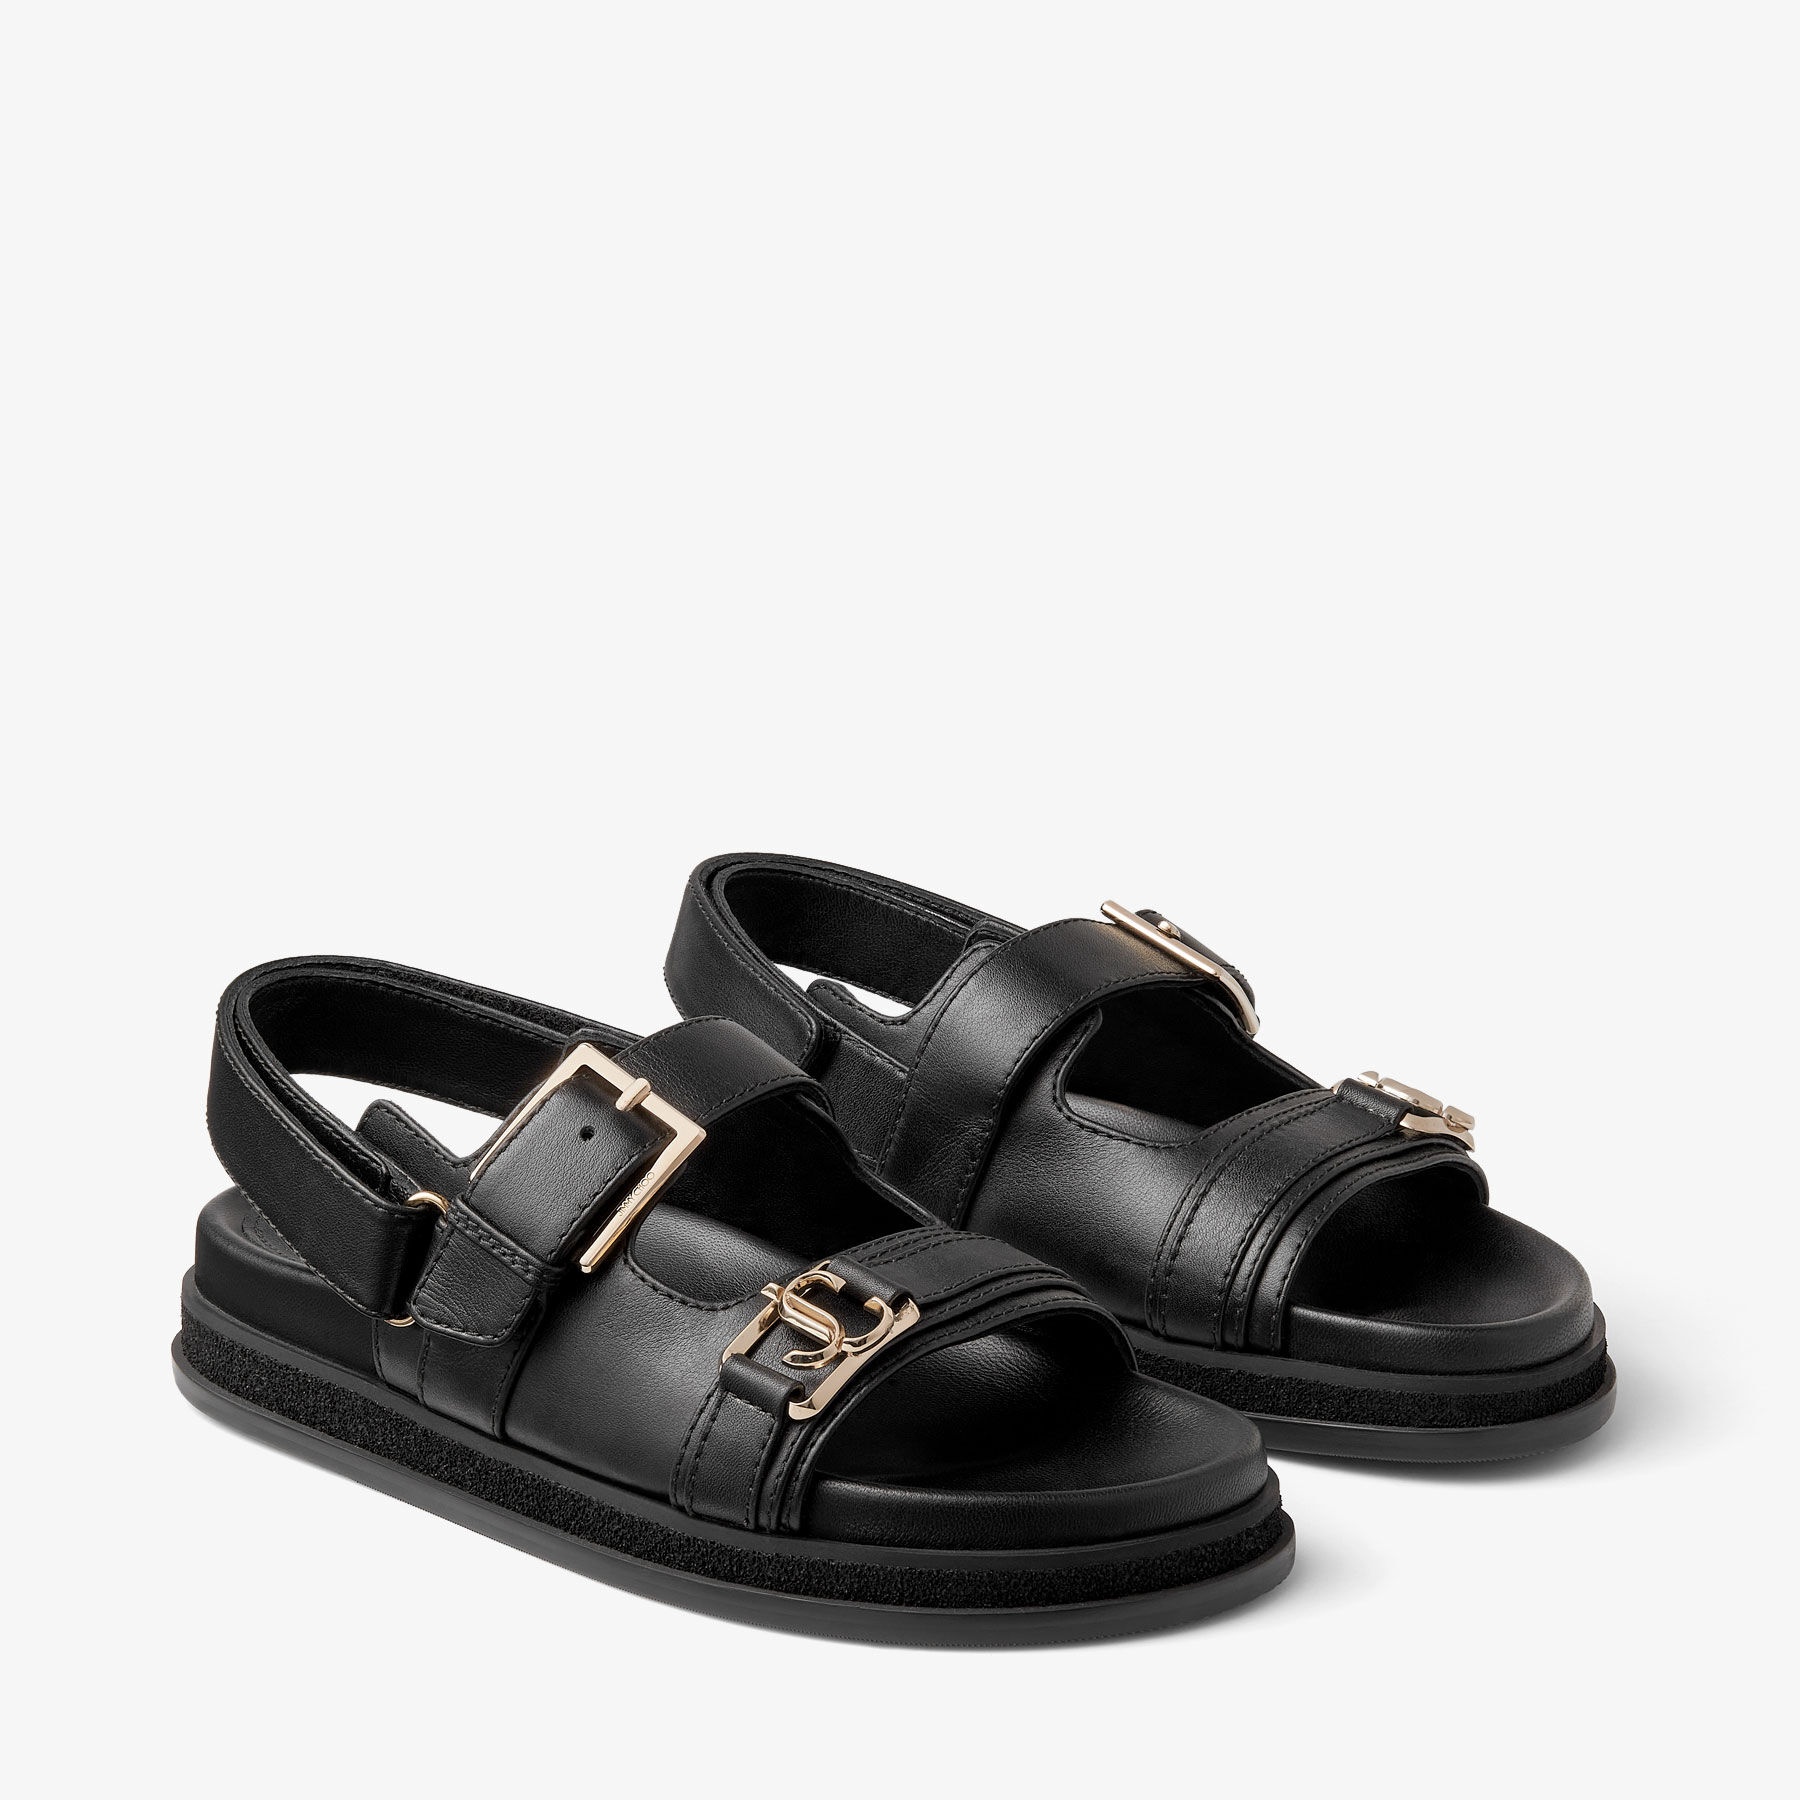 Elyn Flat
Black Calf Leather Flat Sandals - 2